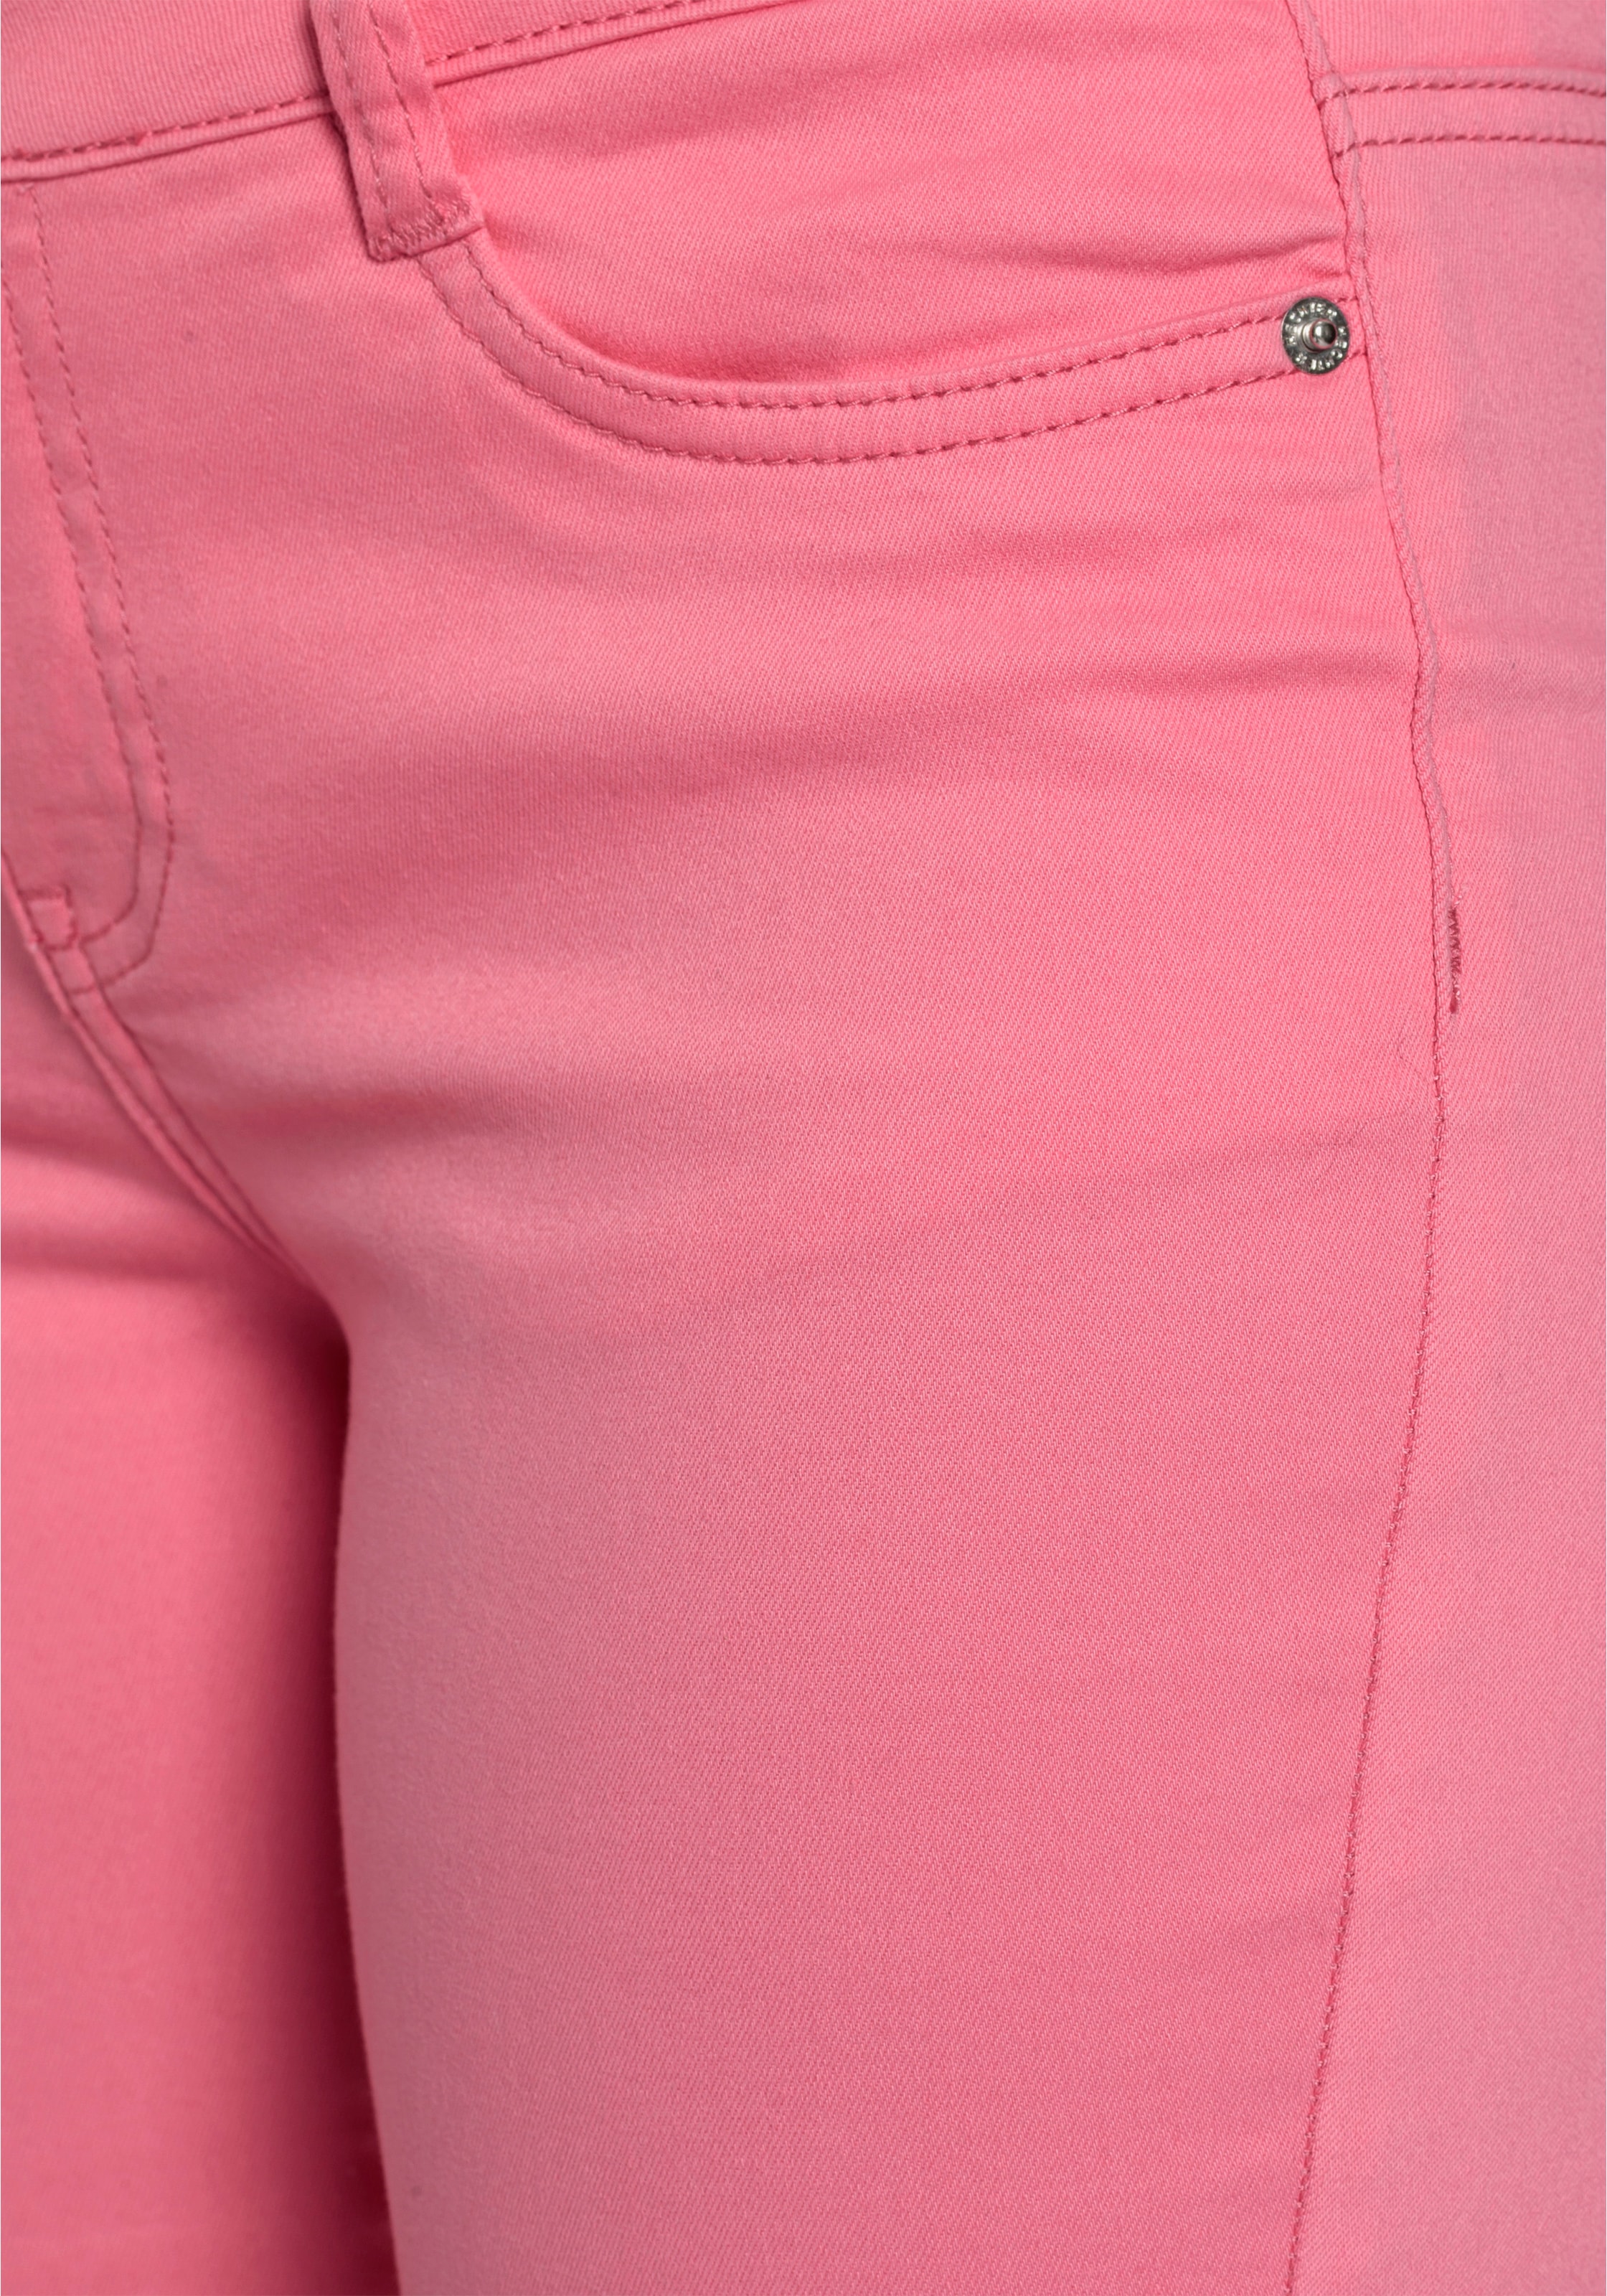 HECHTER PARIS 5-Pocket-Hose, in angesagter Farbe - NEUE KOLLEKTION